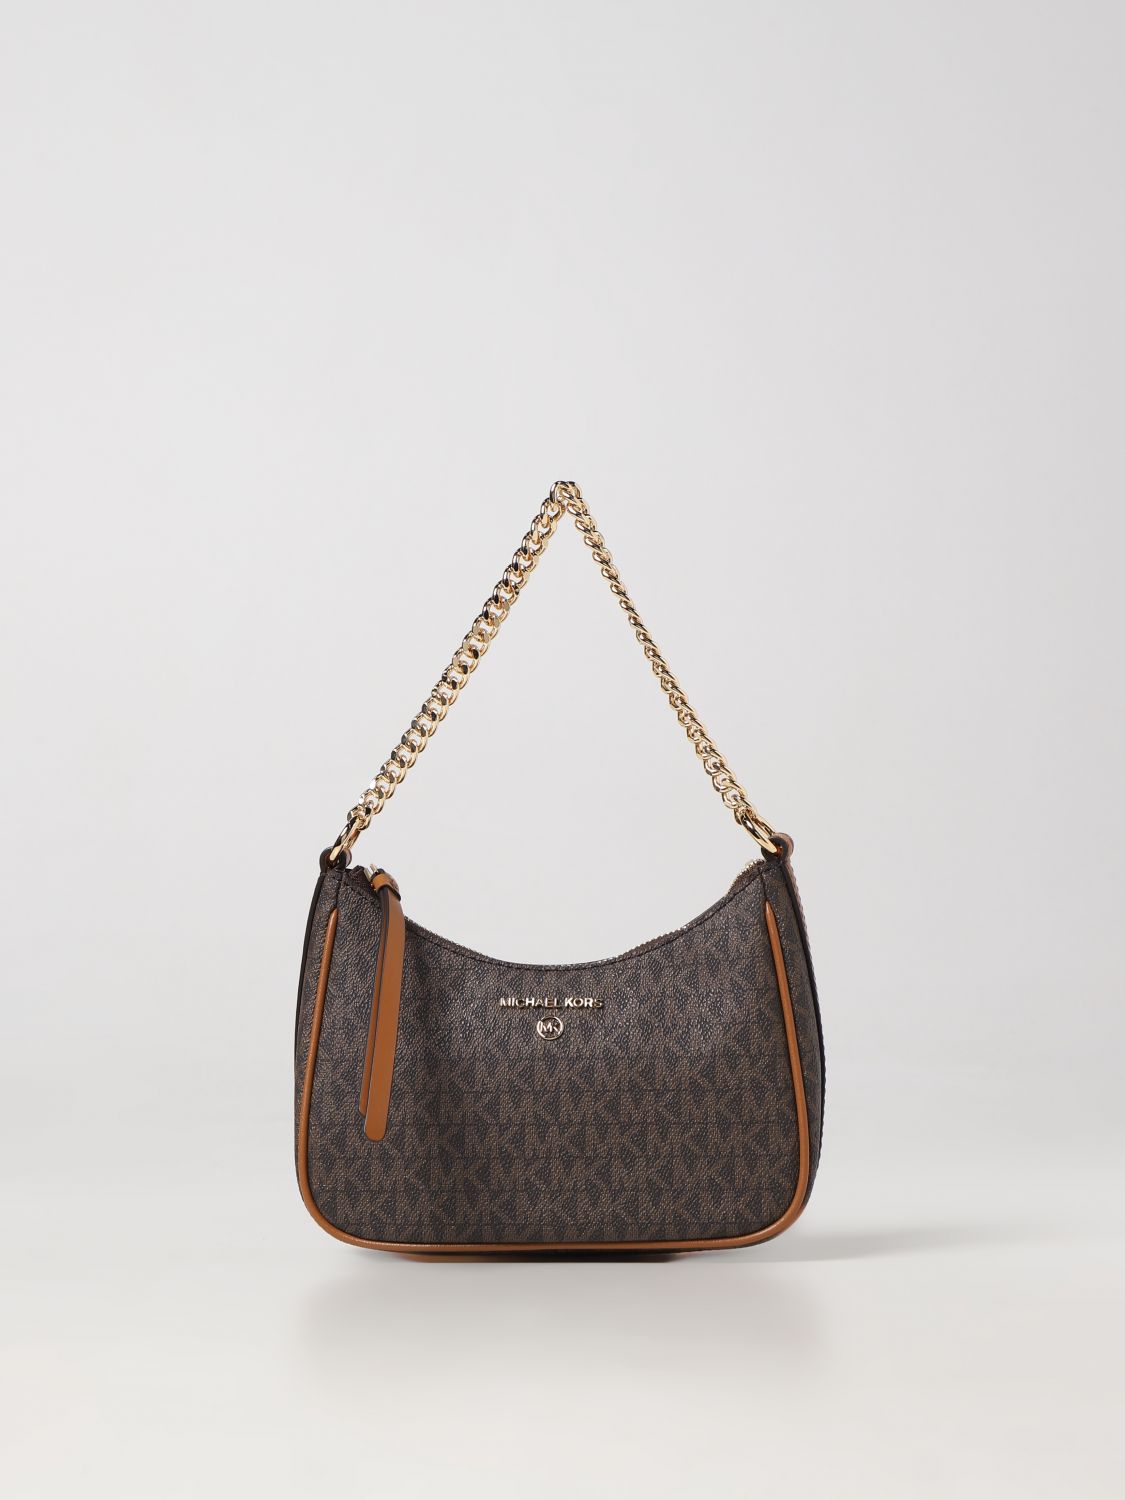 MICHAEL KORS: mini bag for woman - Leather | Michael Kors mini bag ...